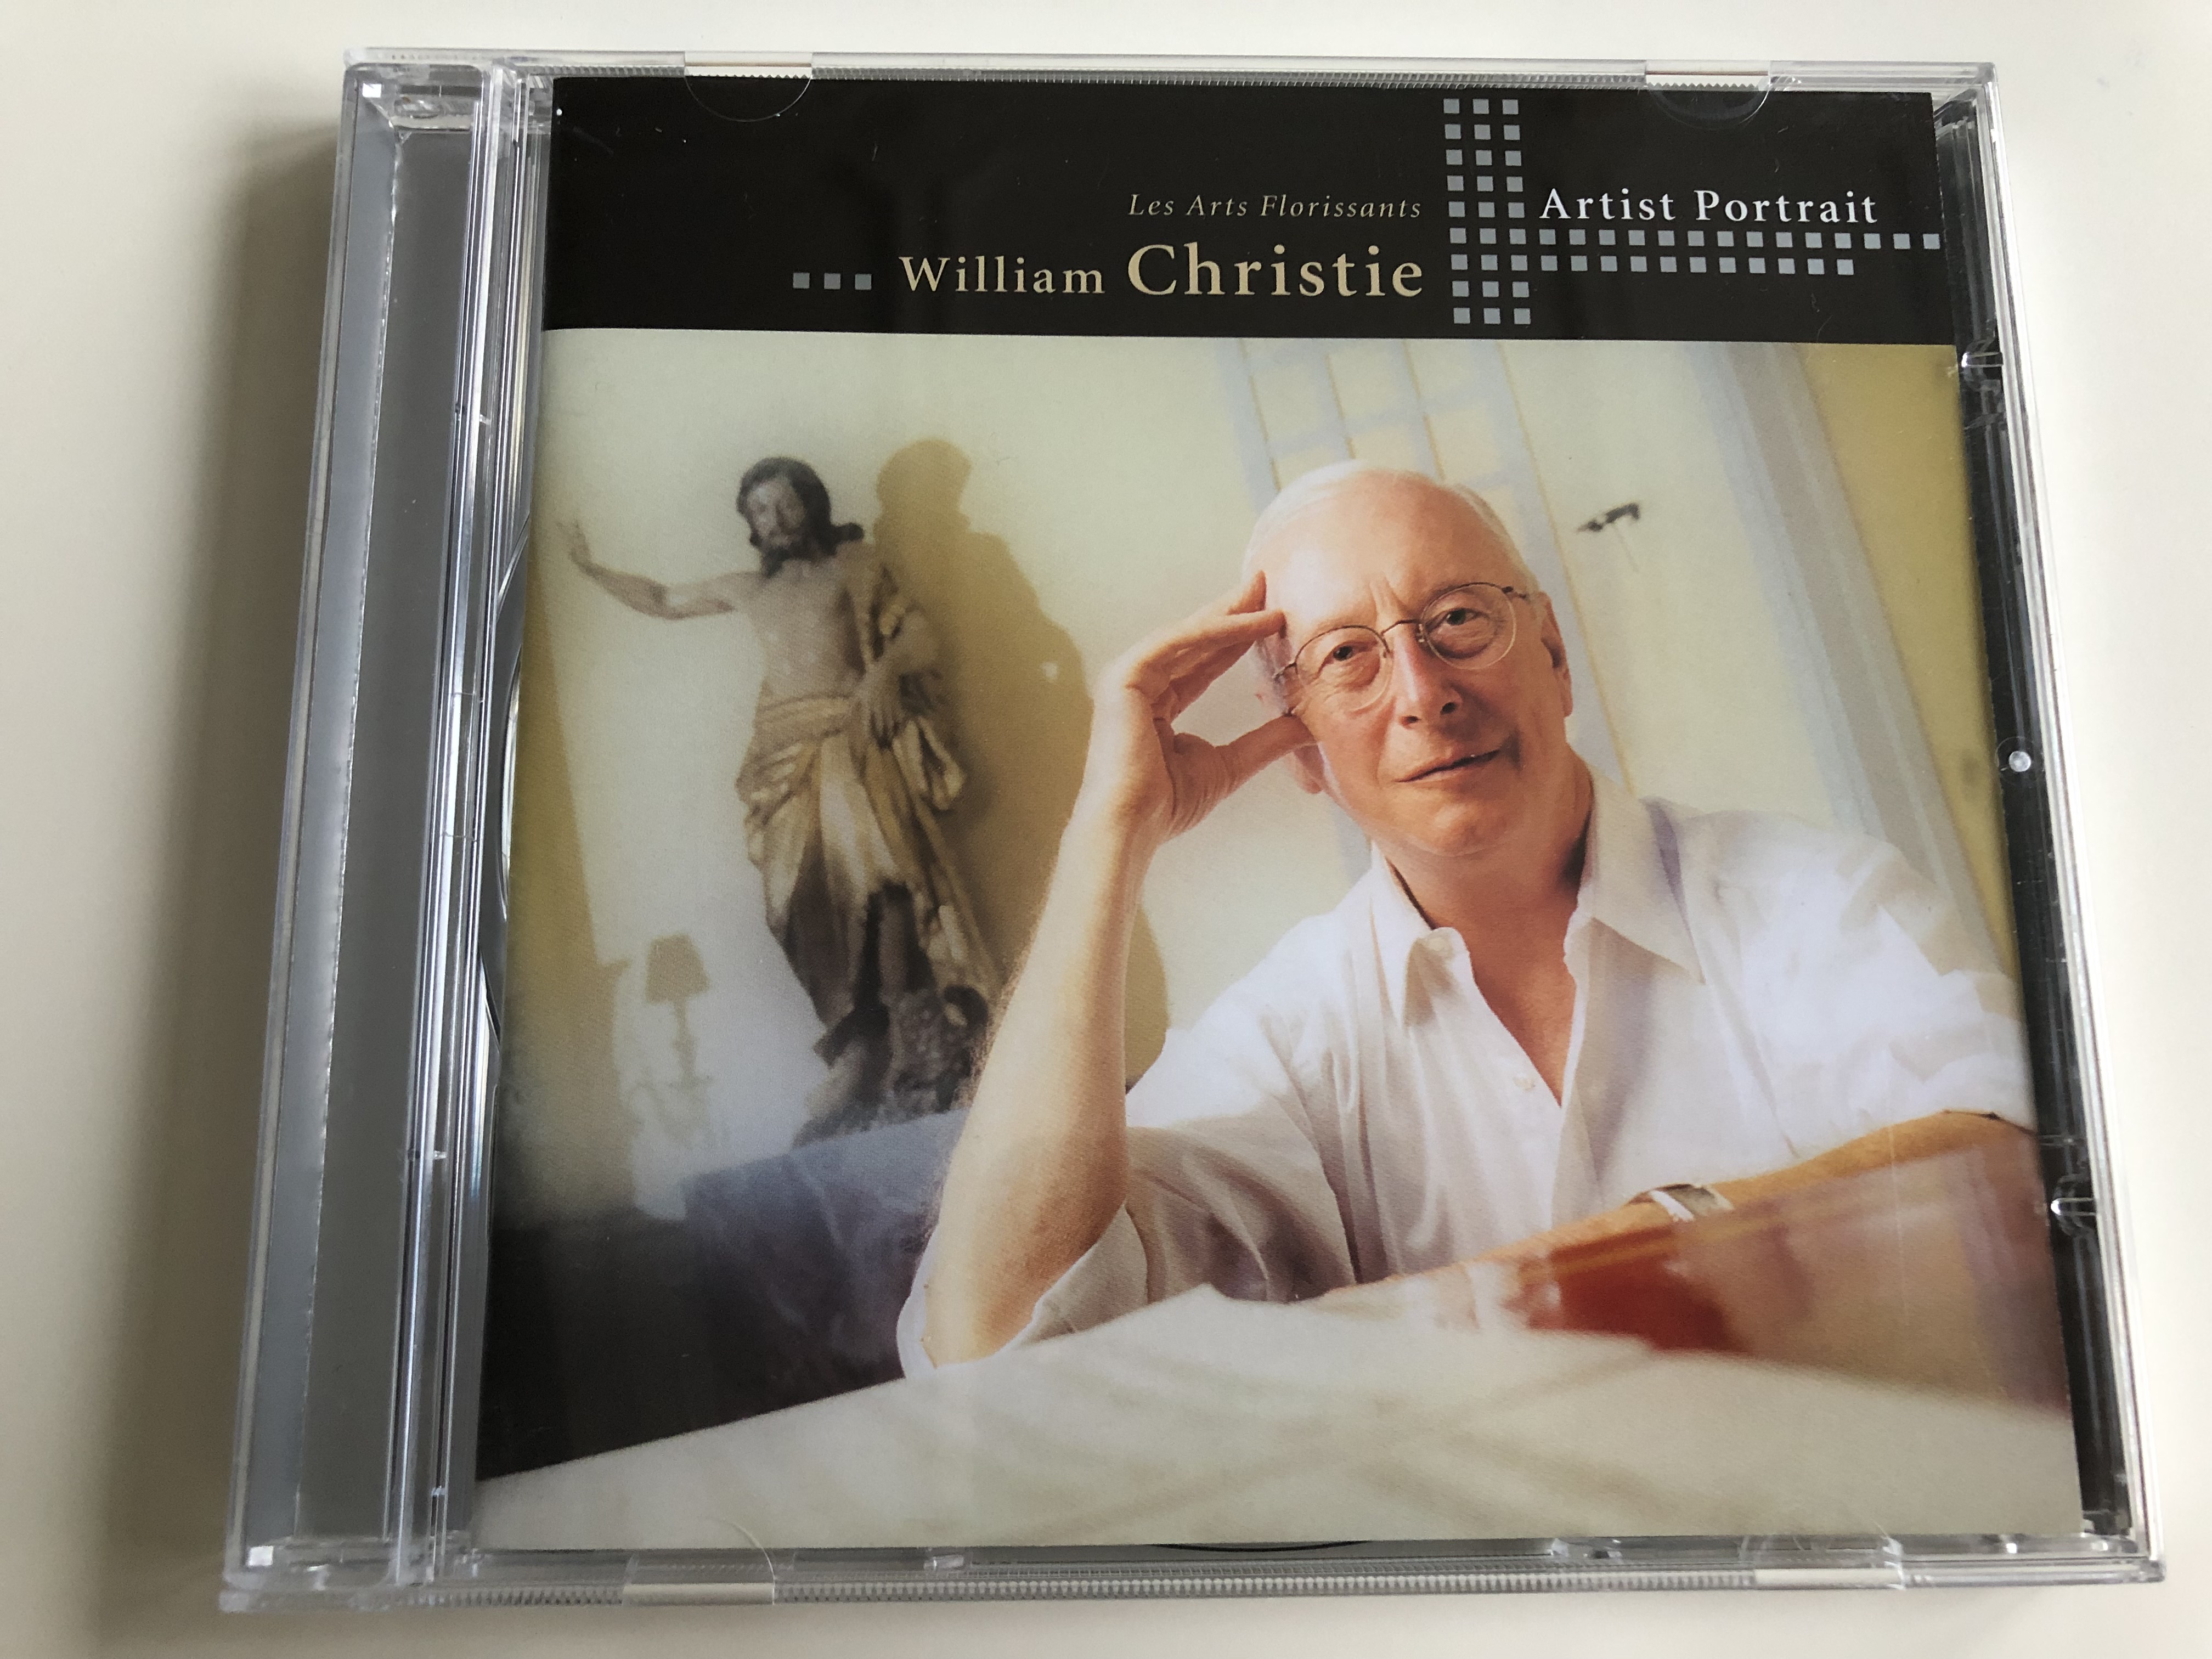 william-christie-les-arts-florissants-artist-portrait-warner-music-audio-cd-2002-1-.jpg